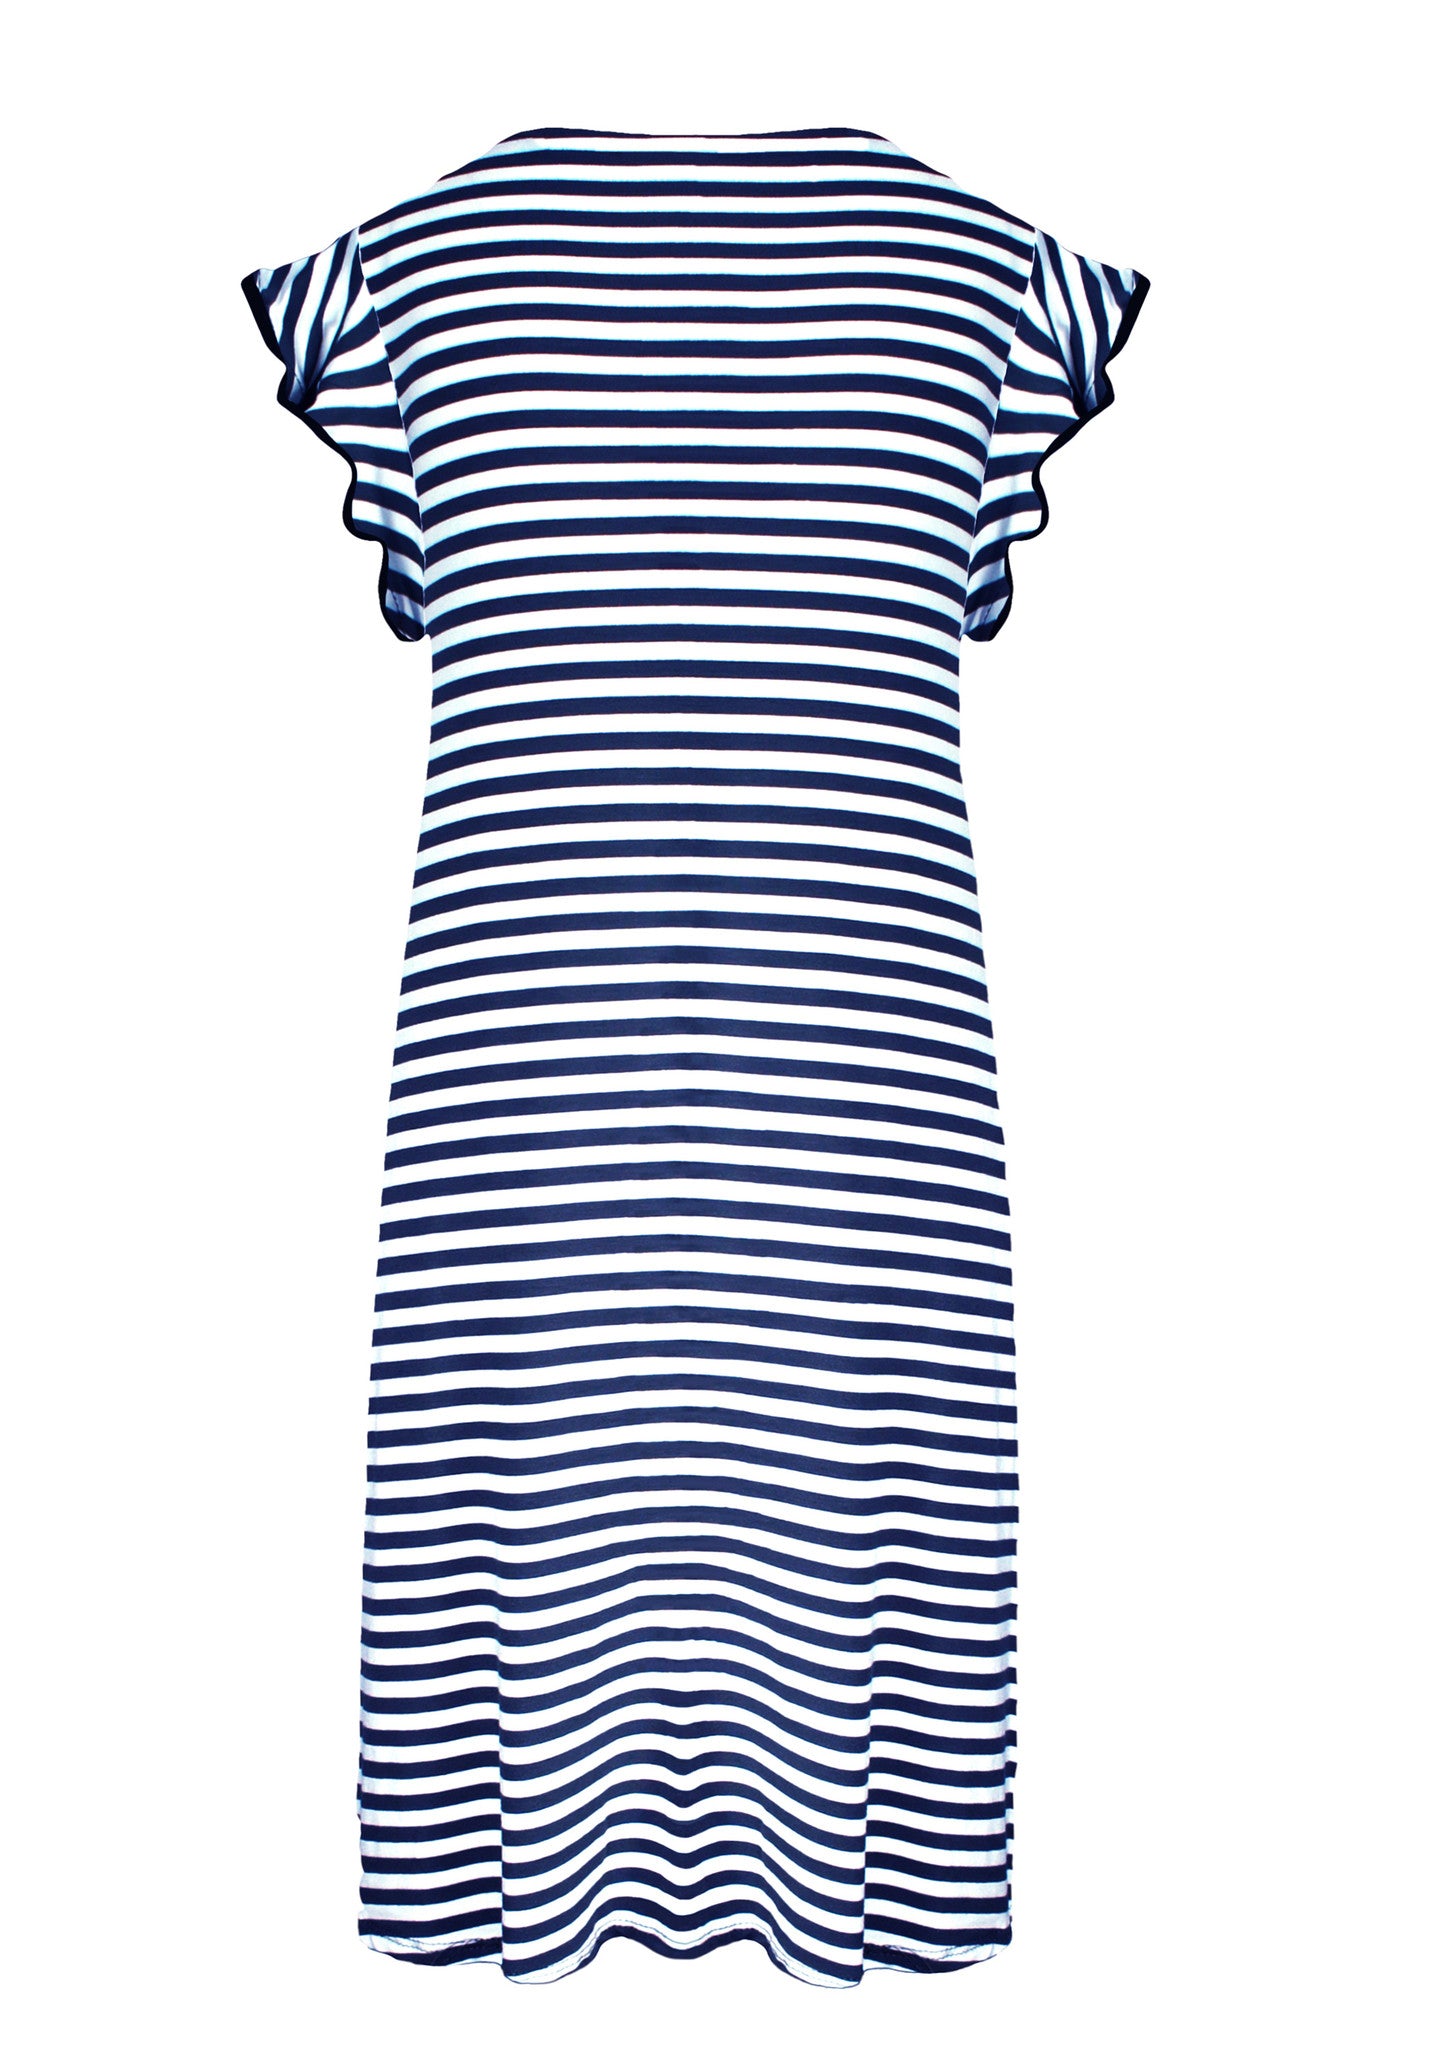 Stripe Ruffle Dress Navy Blue